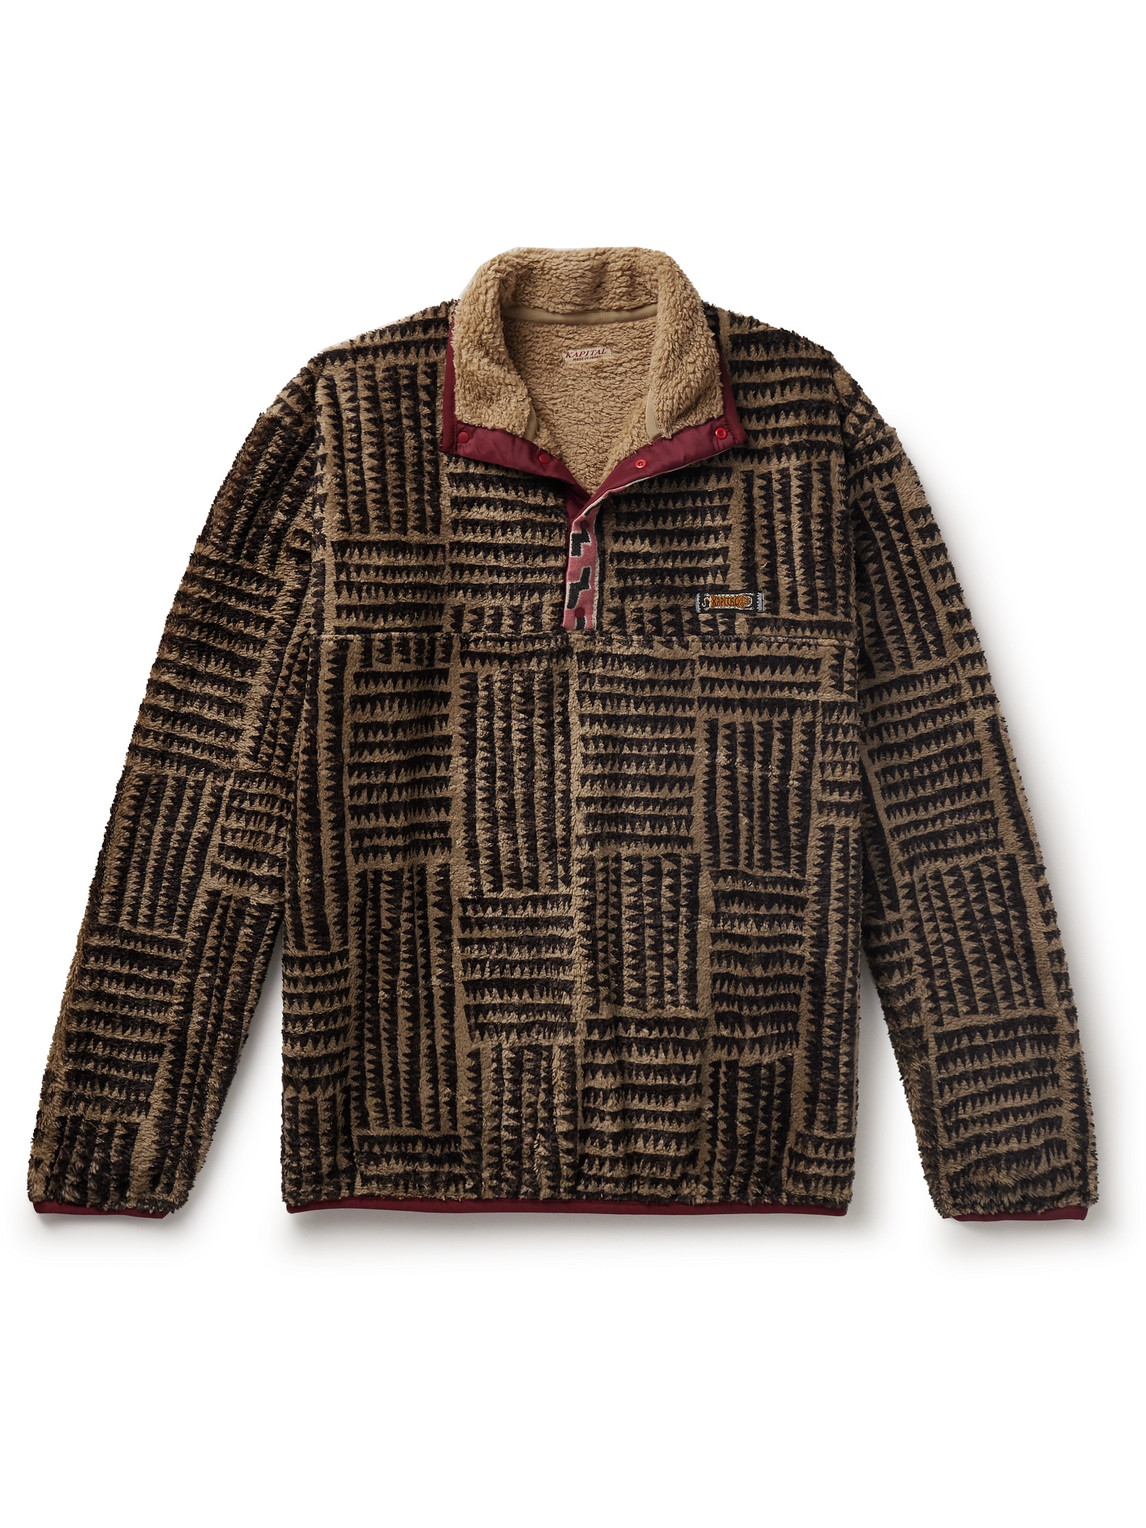 KAPITAL - Hacksaw Printed Fleece Half-Placket Sweatshirt - Men - Brown - 2 von KAPITAL